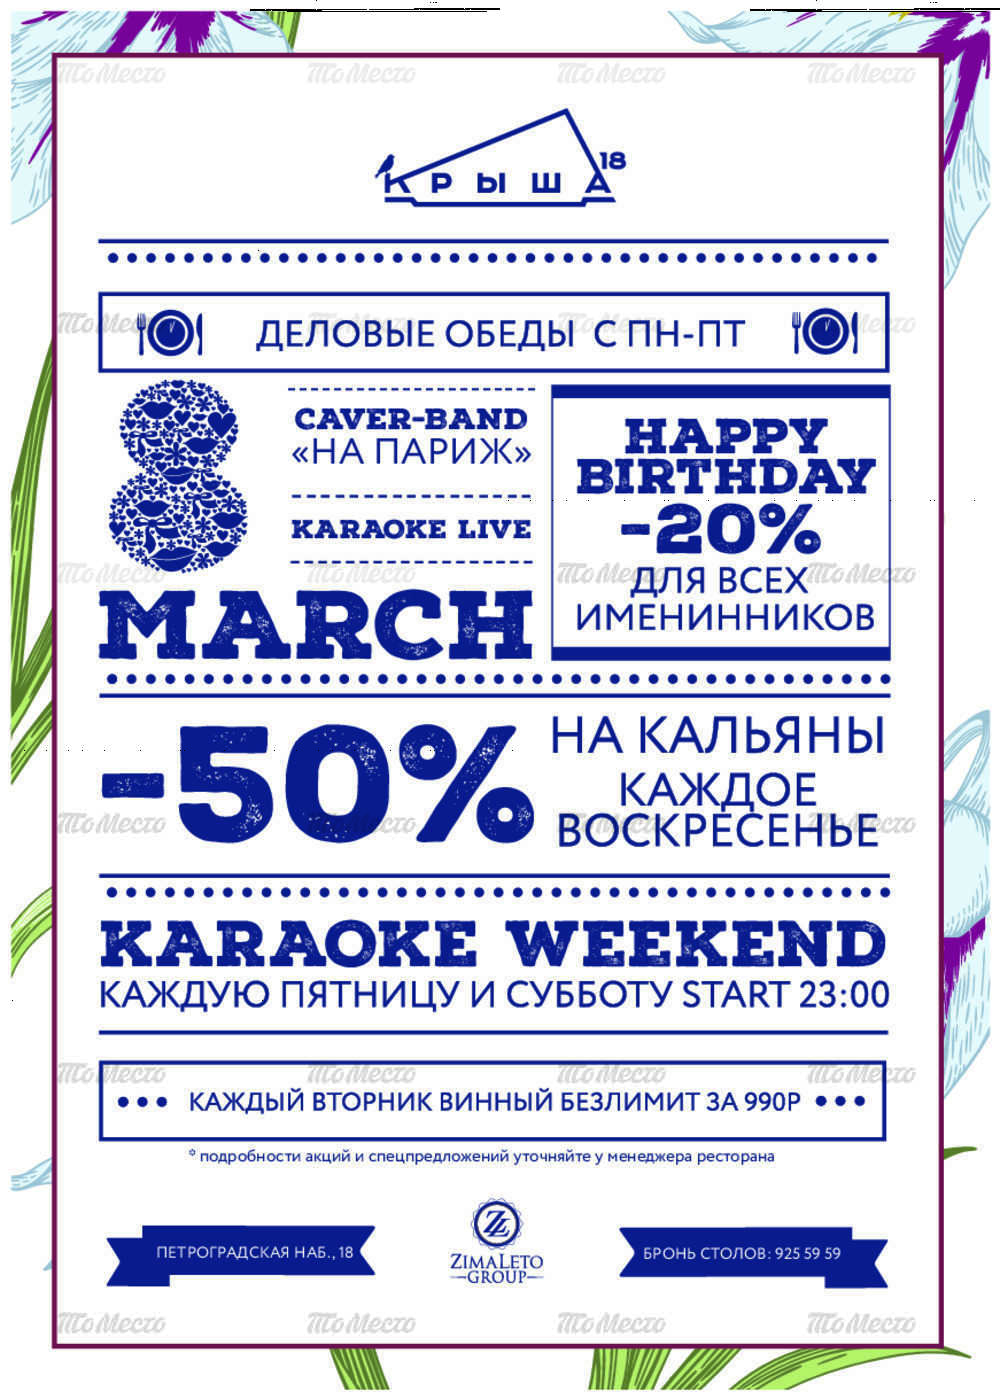 Karaoke Weekend. Cover band "На Париж"